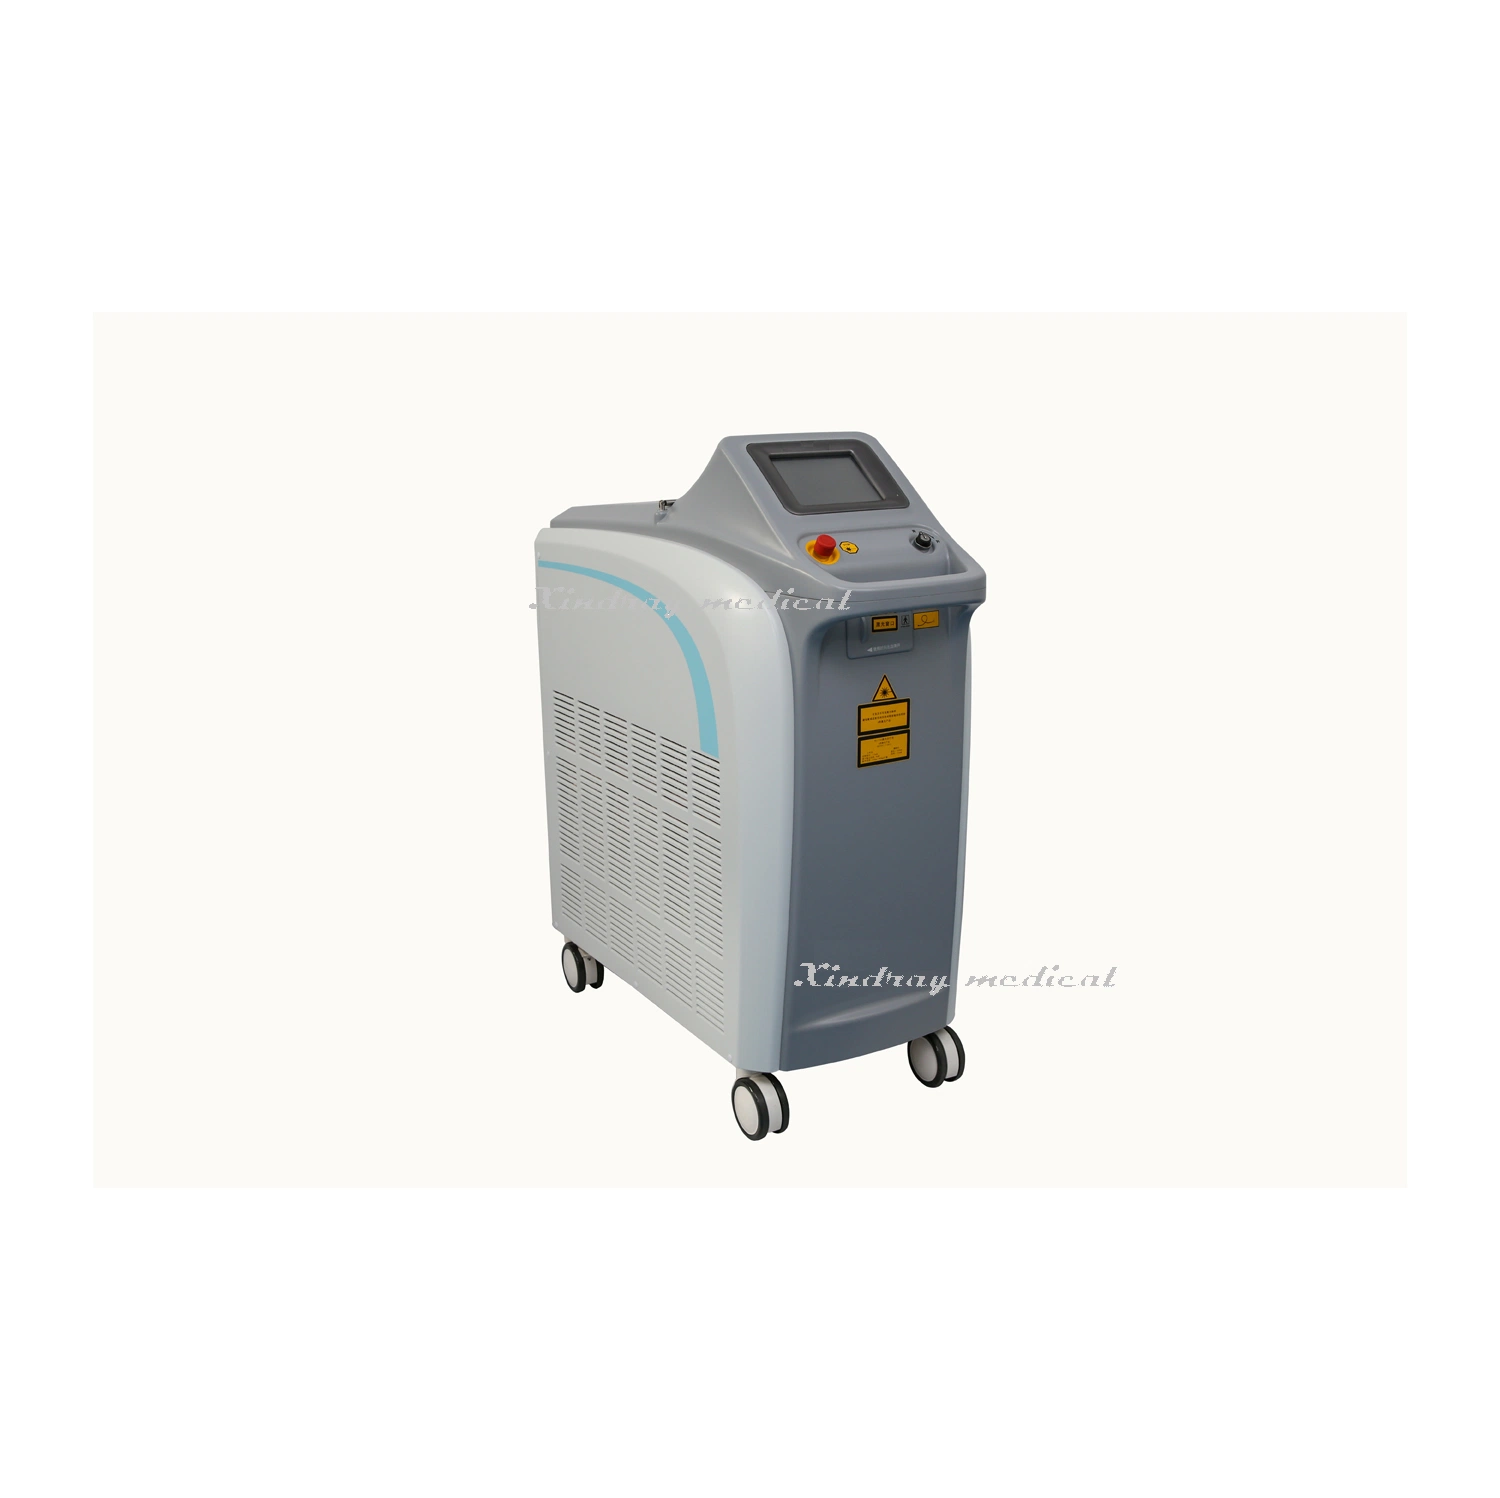 Surgical Equipment for Kidney Stones Hospital Medical Holmium Laser